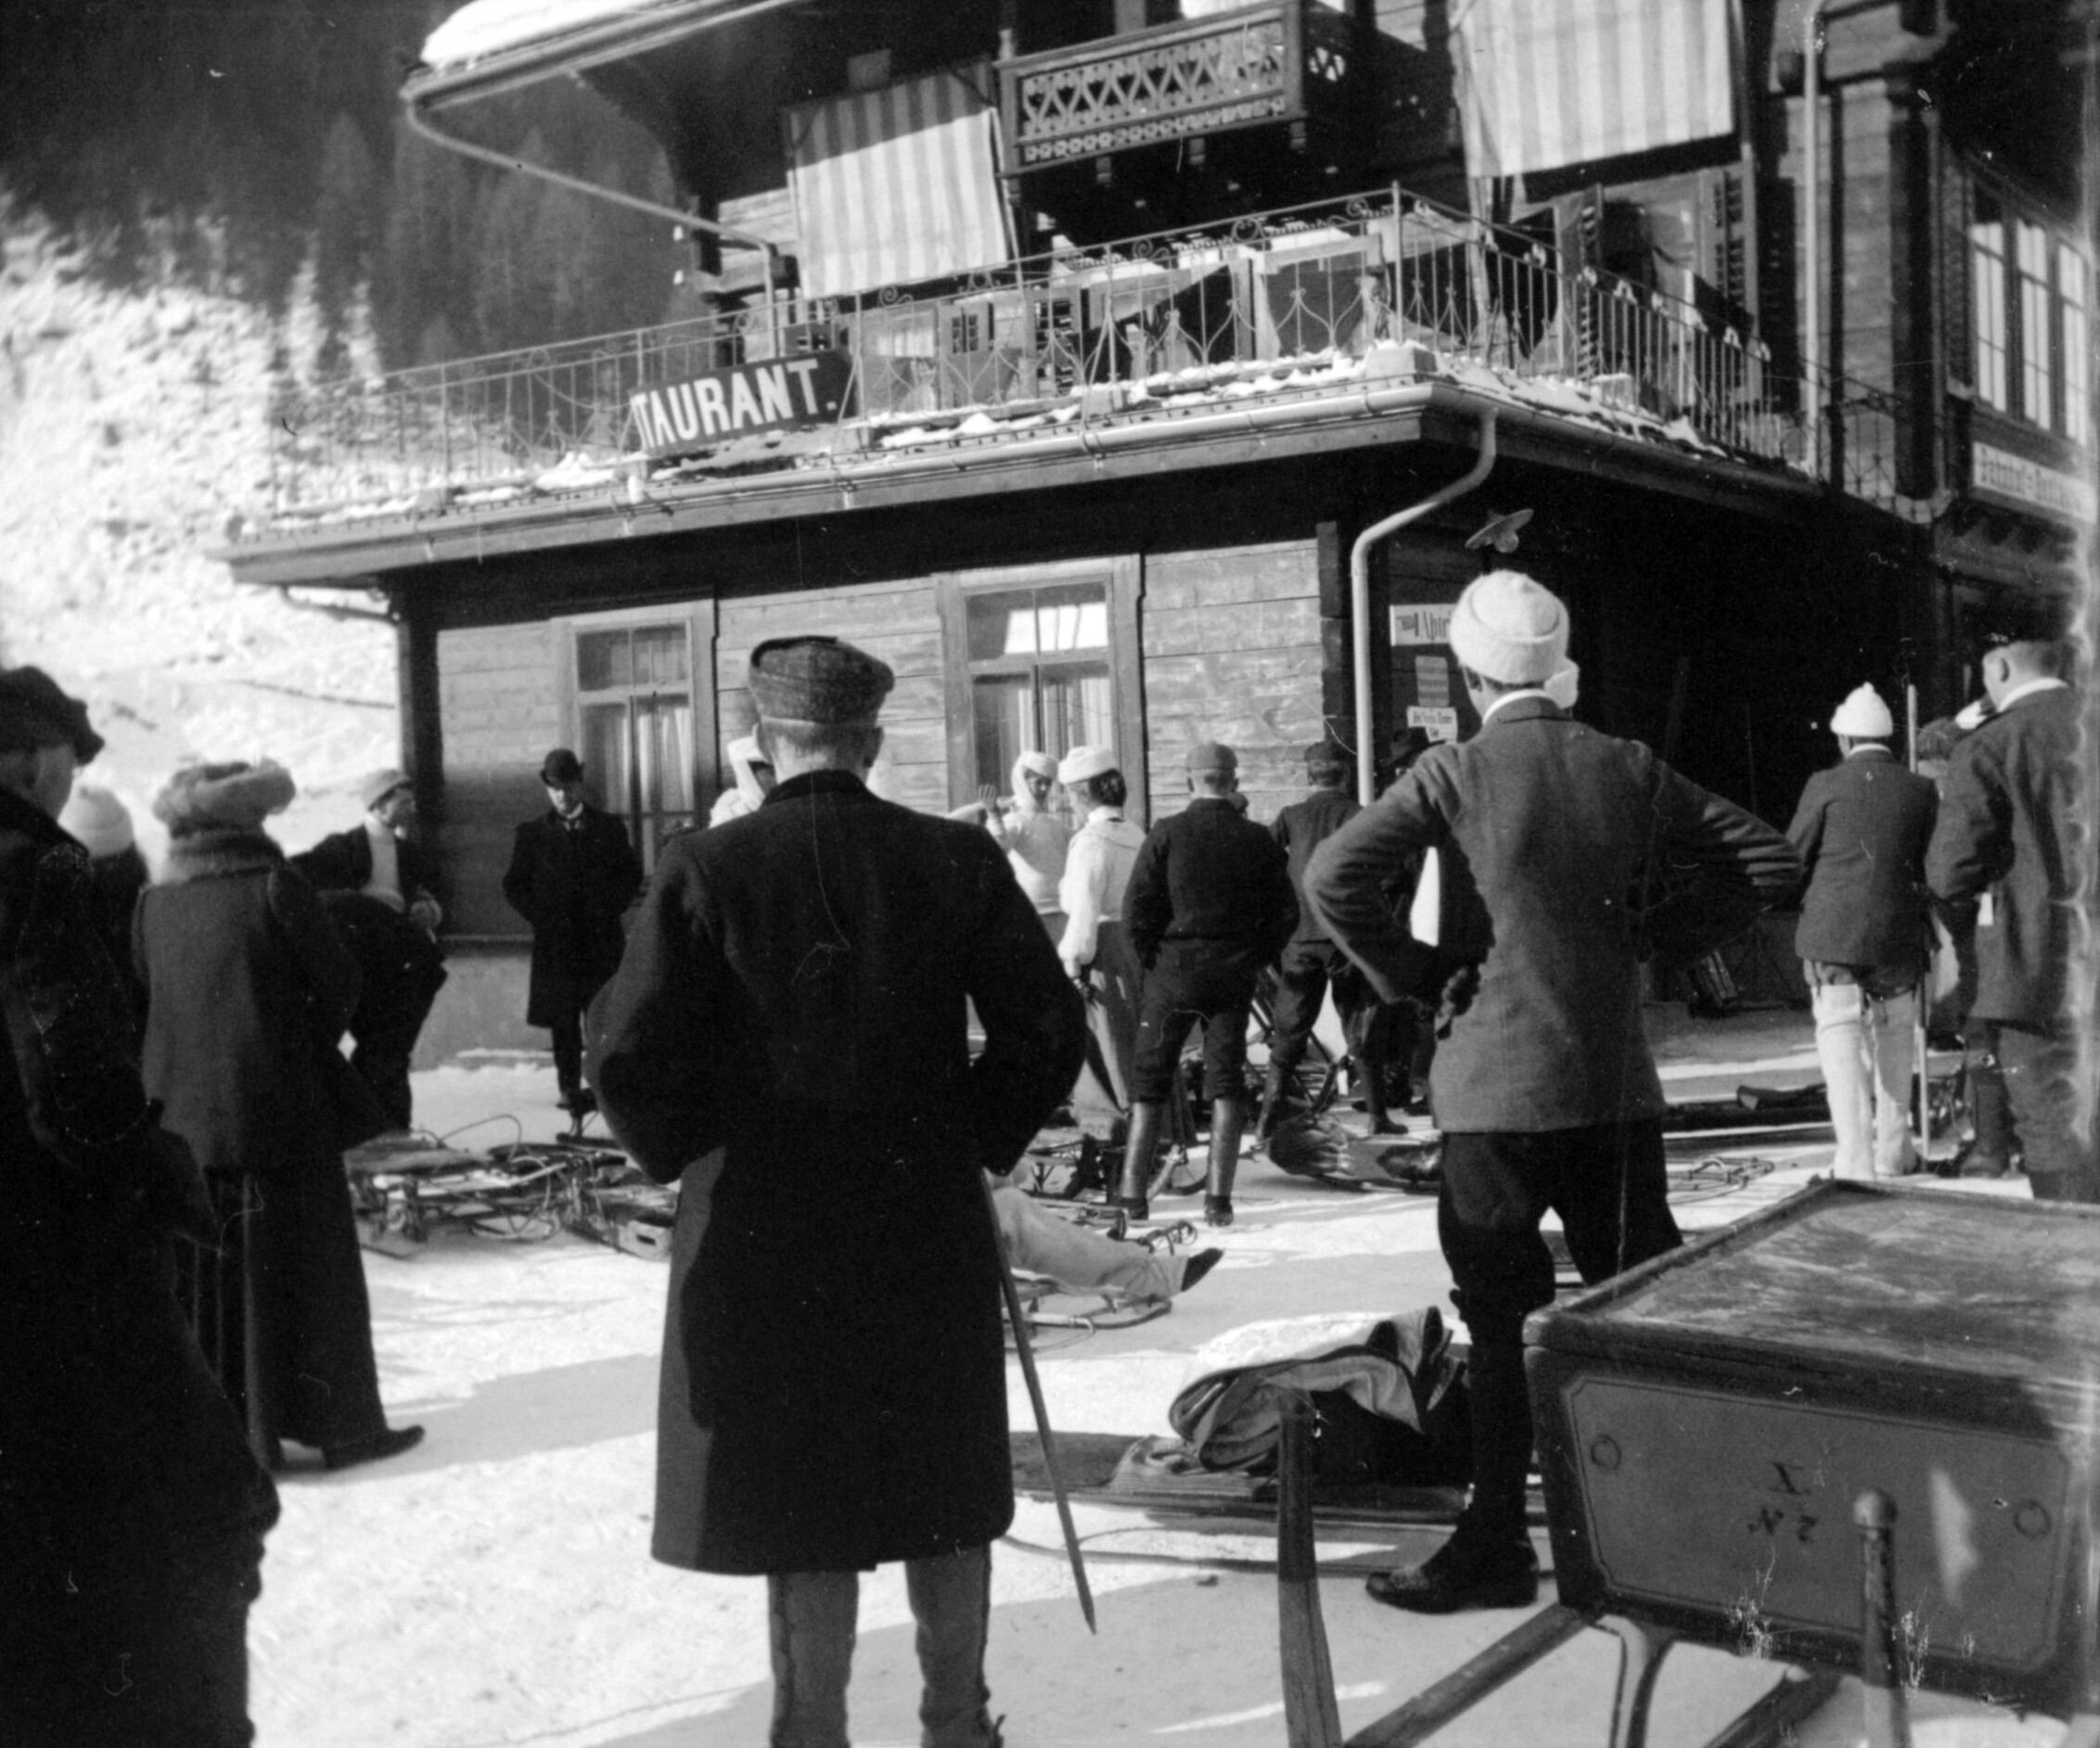 Wintersportler am Bahnhof Klosters Platz (07.01.1905), 87544 sn R (DRM CC BY-NC-SA)